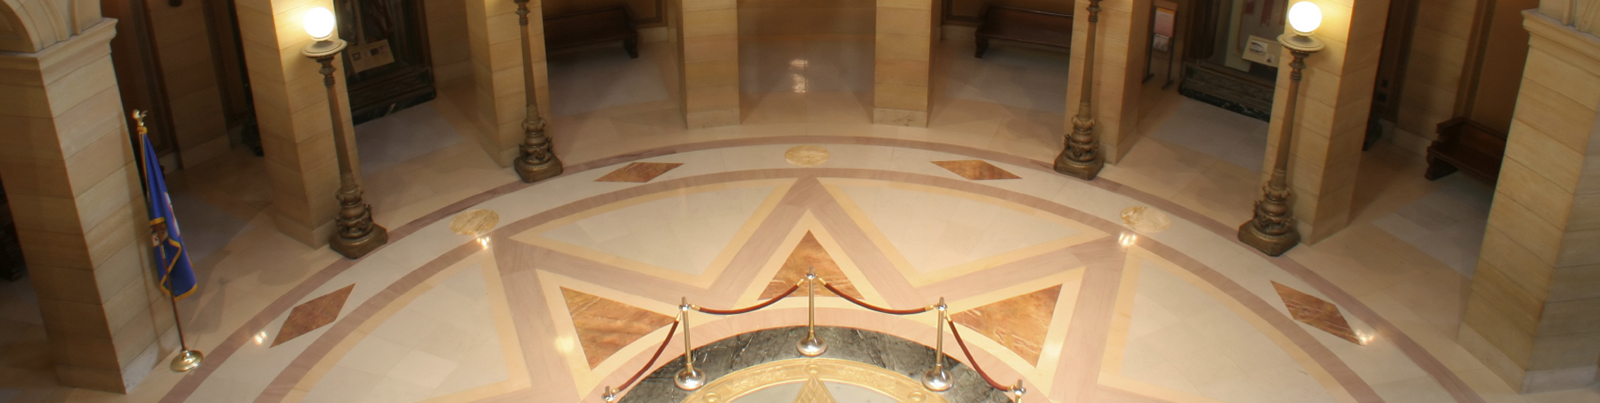 View looking down at an empty Minnesota Capitol rotunda